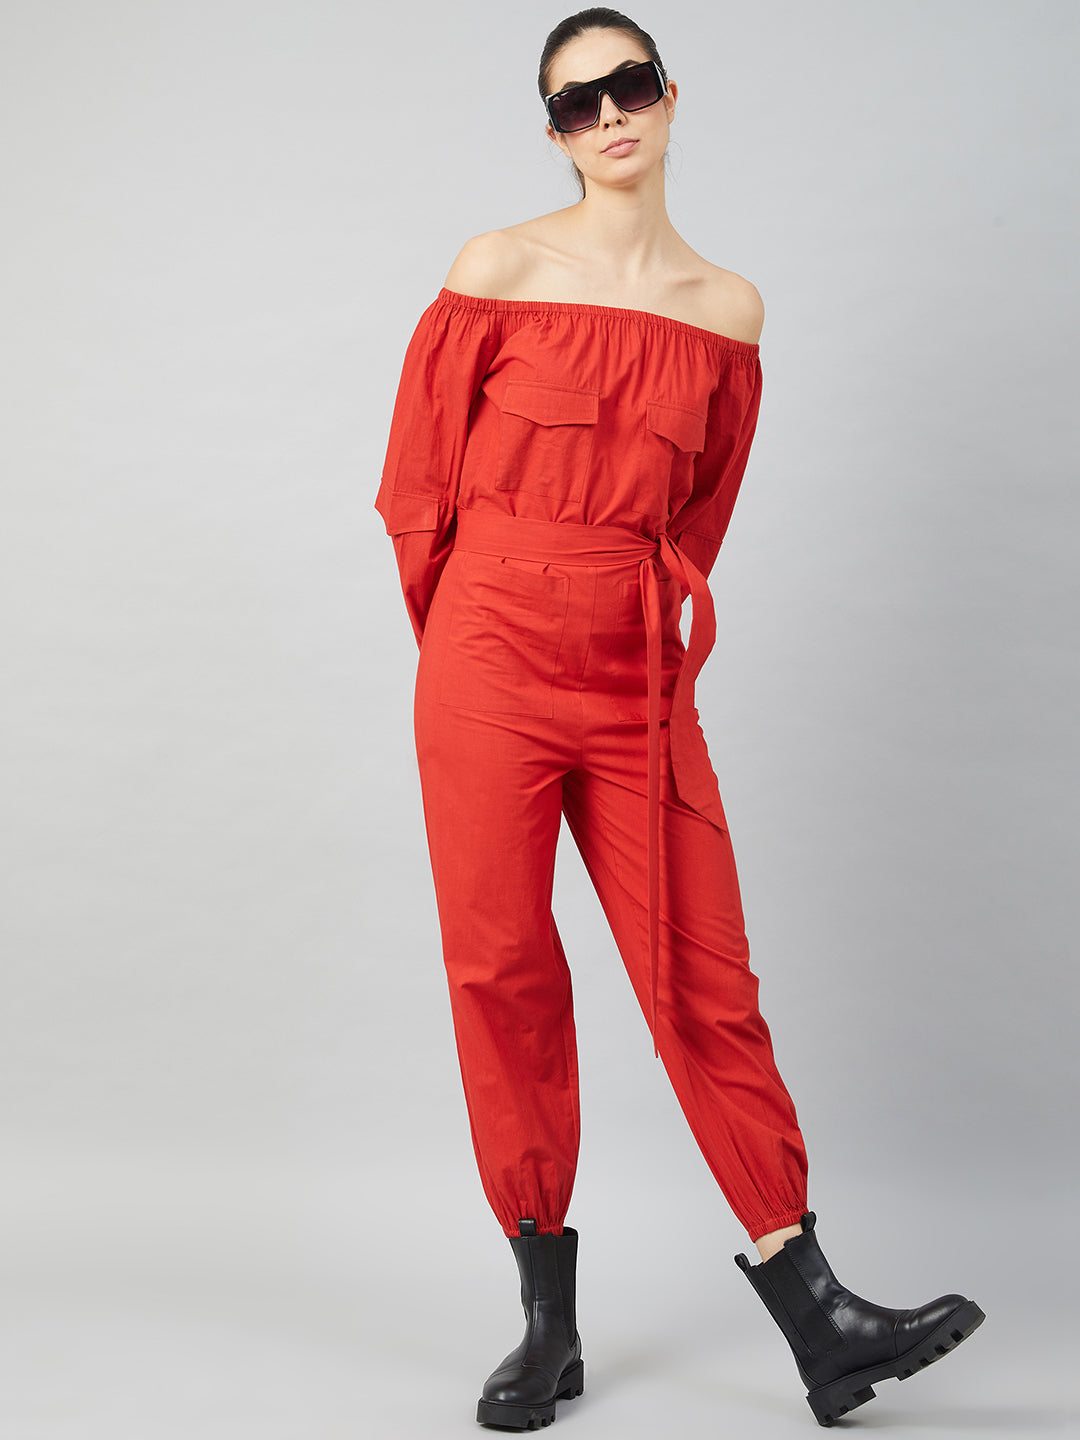 Athena Women Red Solid Cotton Jumpsuit - Athena Lifestyle